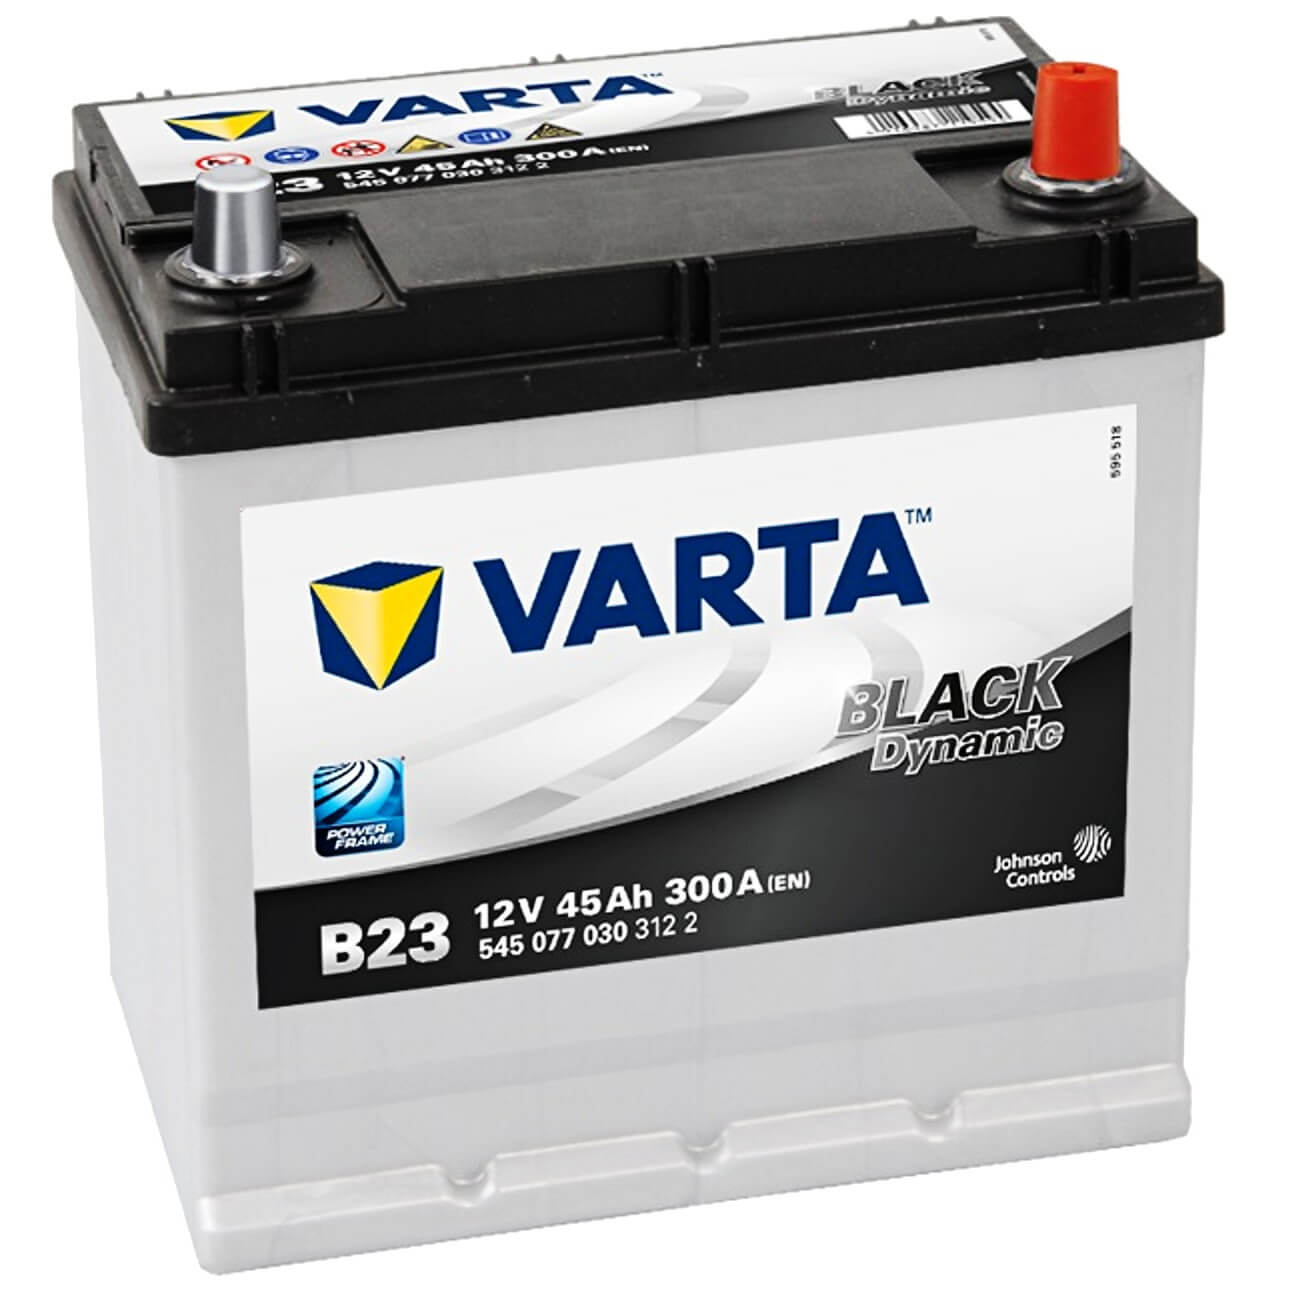 Varta B23 Black Dynamic 12V 45Ah Autobatterie 545077030